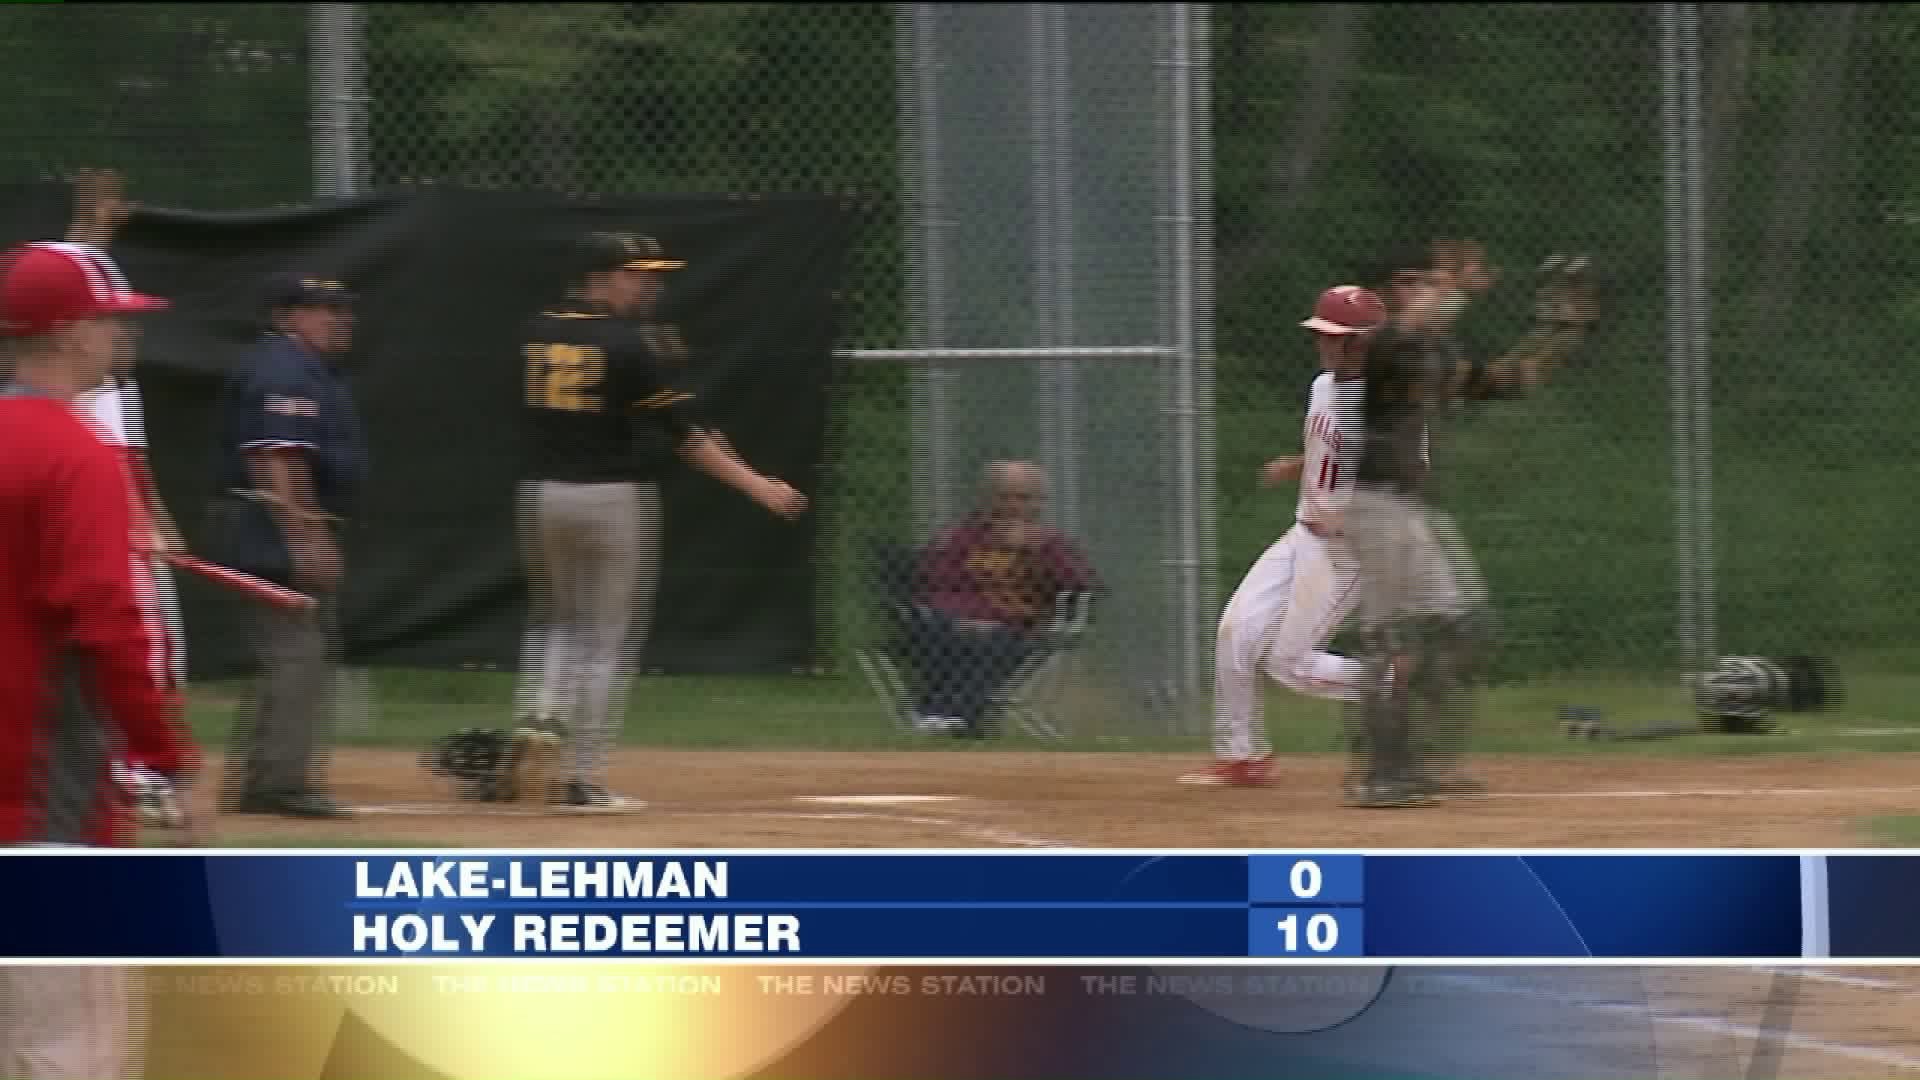 Lake-Lehman vs Holy Redeemer baseball